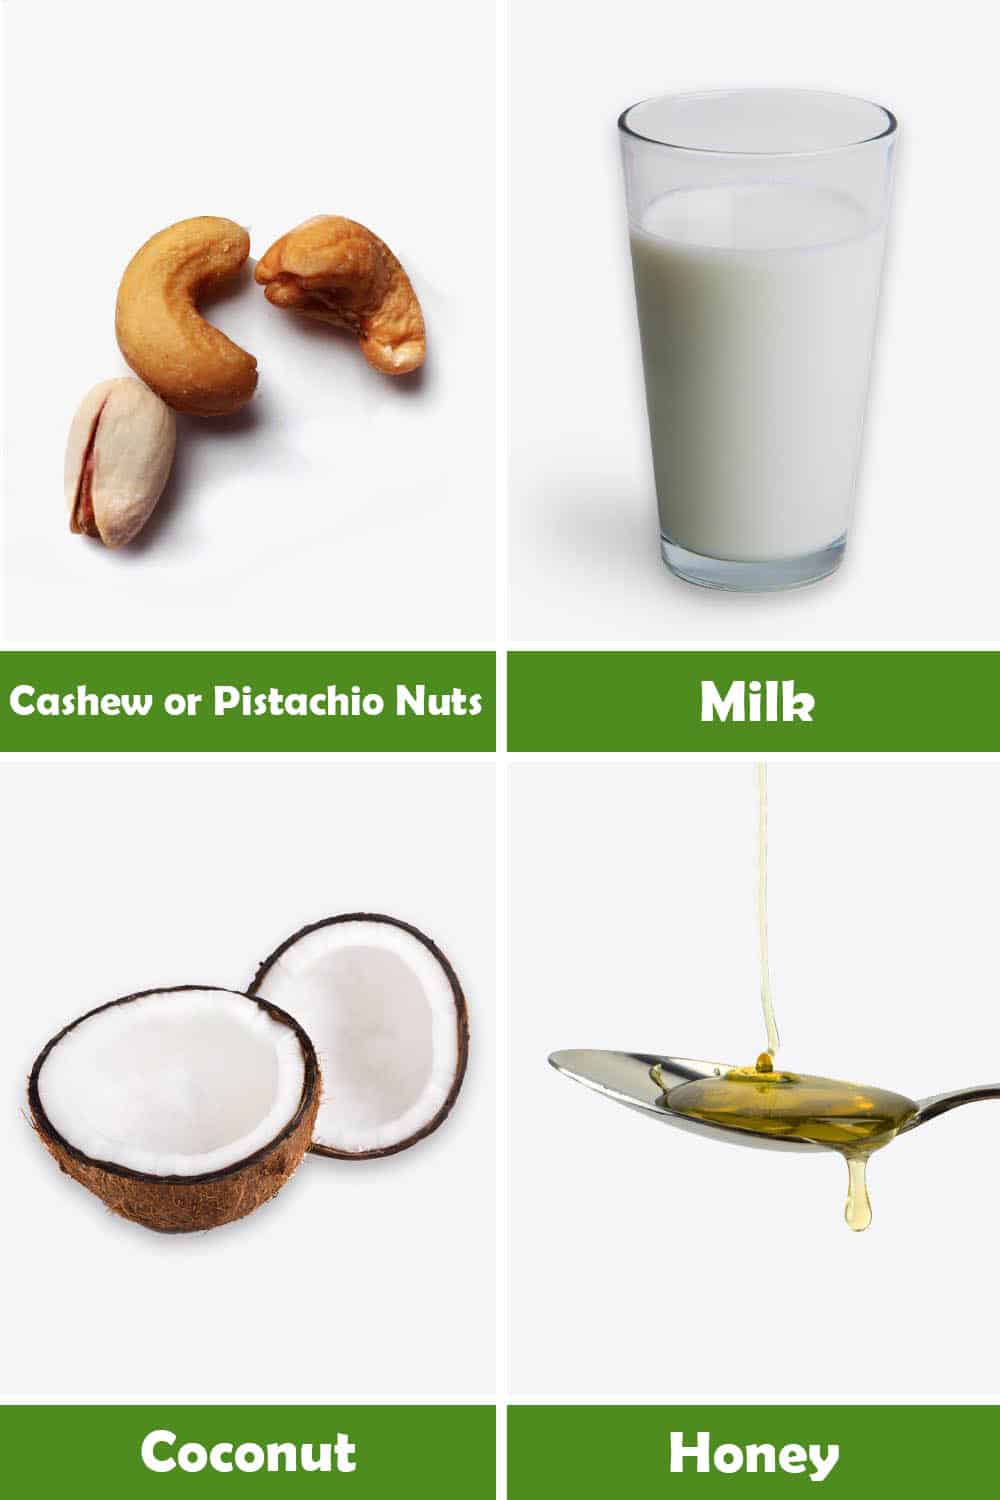 CASHEW OR PISTACHIO NUTS, MILK, COCONUT AND HONEY